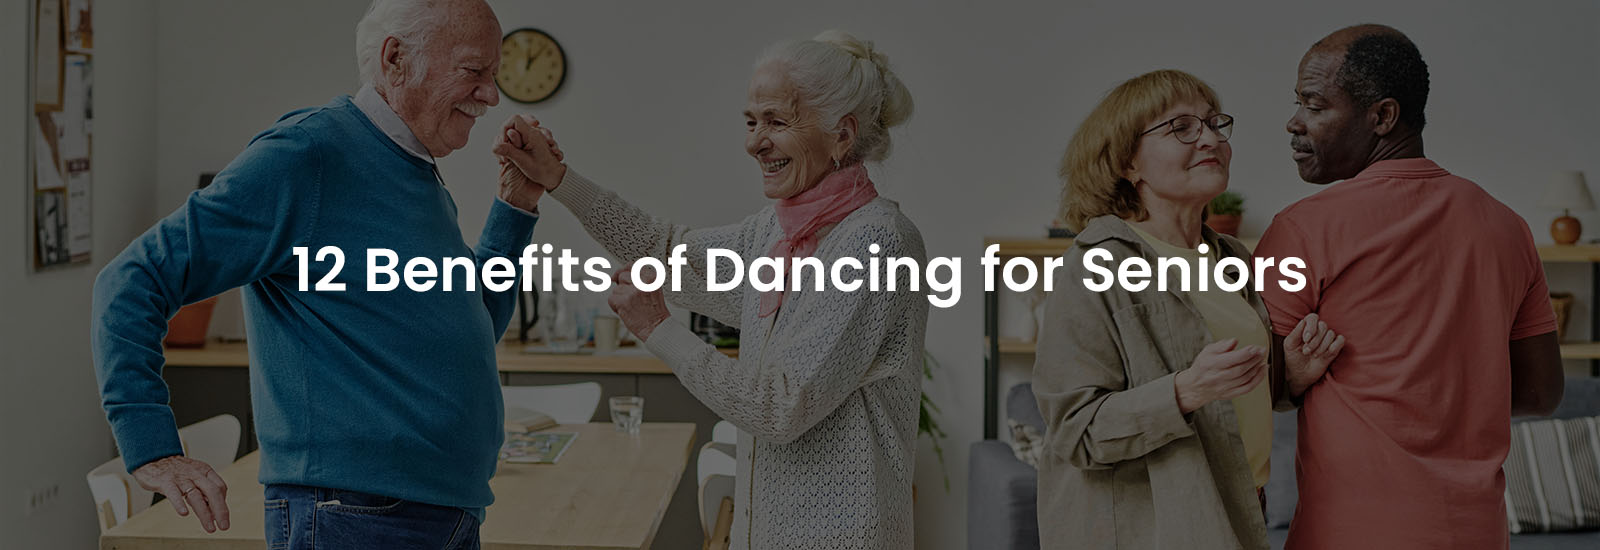 12 Benefits of Dancing for Seniors | Banner Image